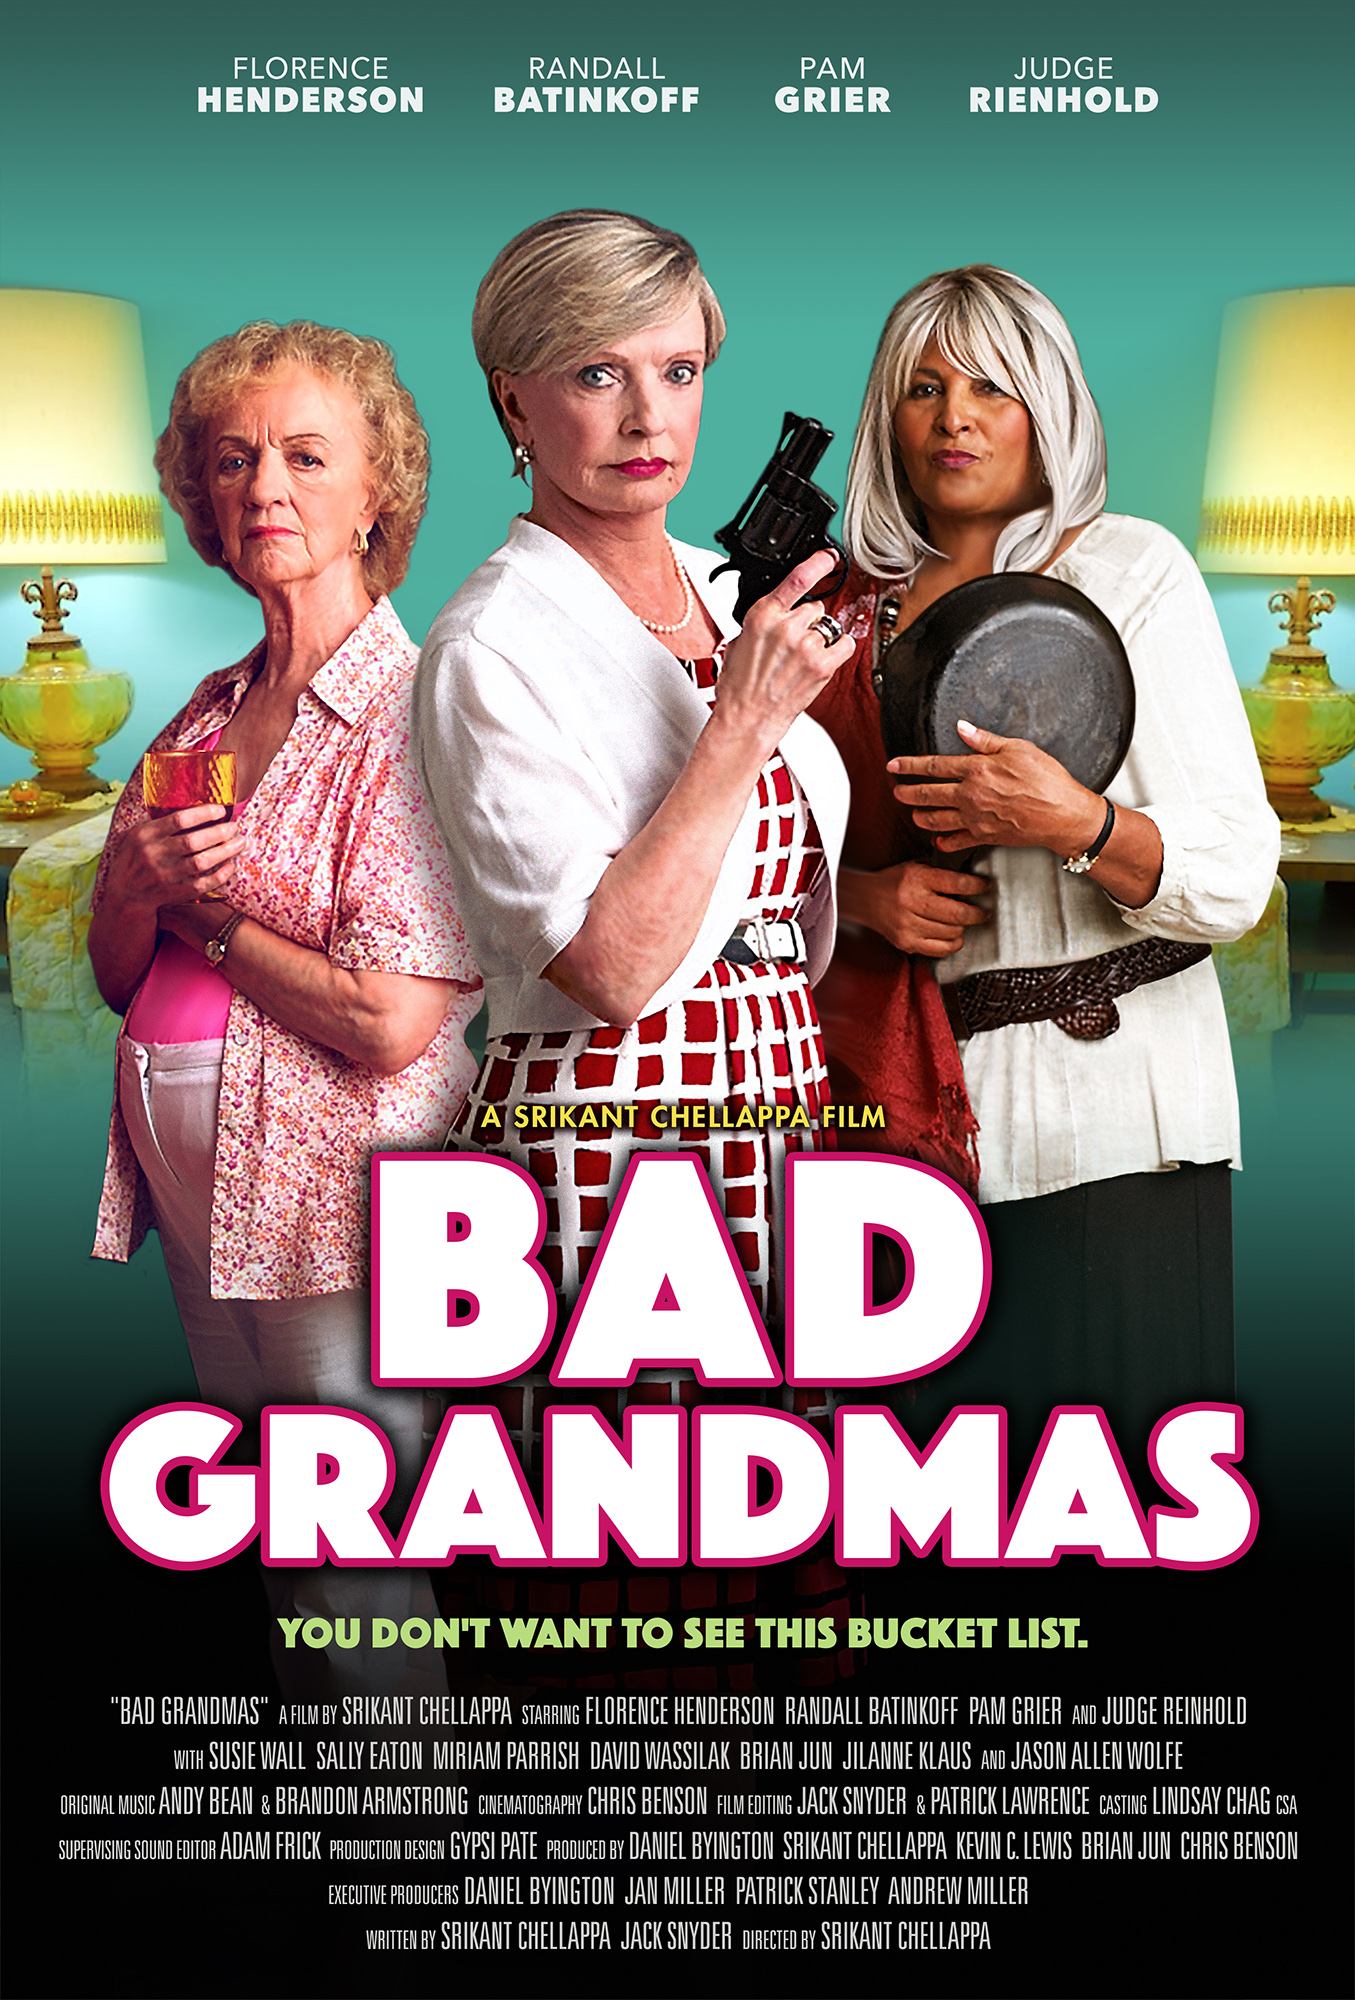 Nonton film Bad Grandmas layarkaca21 indoxx1 ganool online streaming terbaru